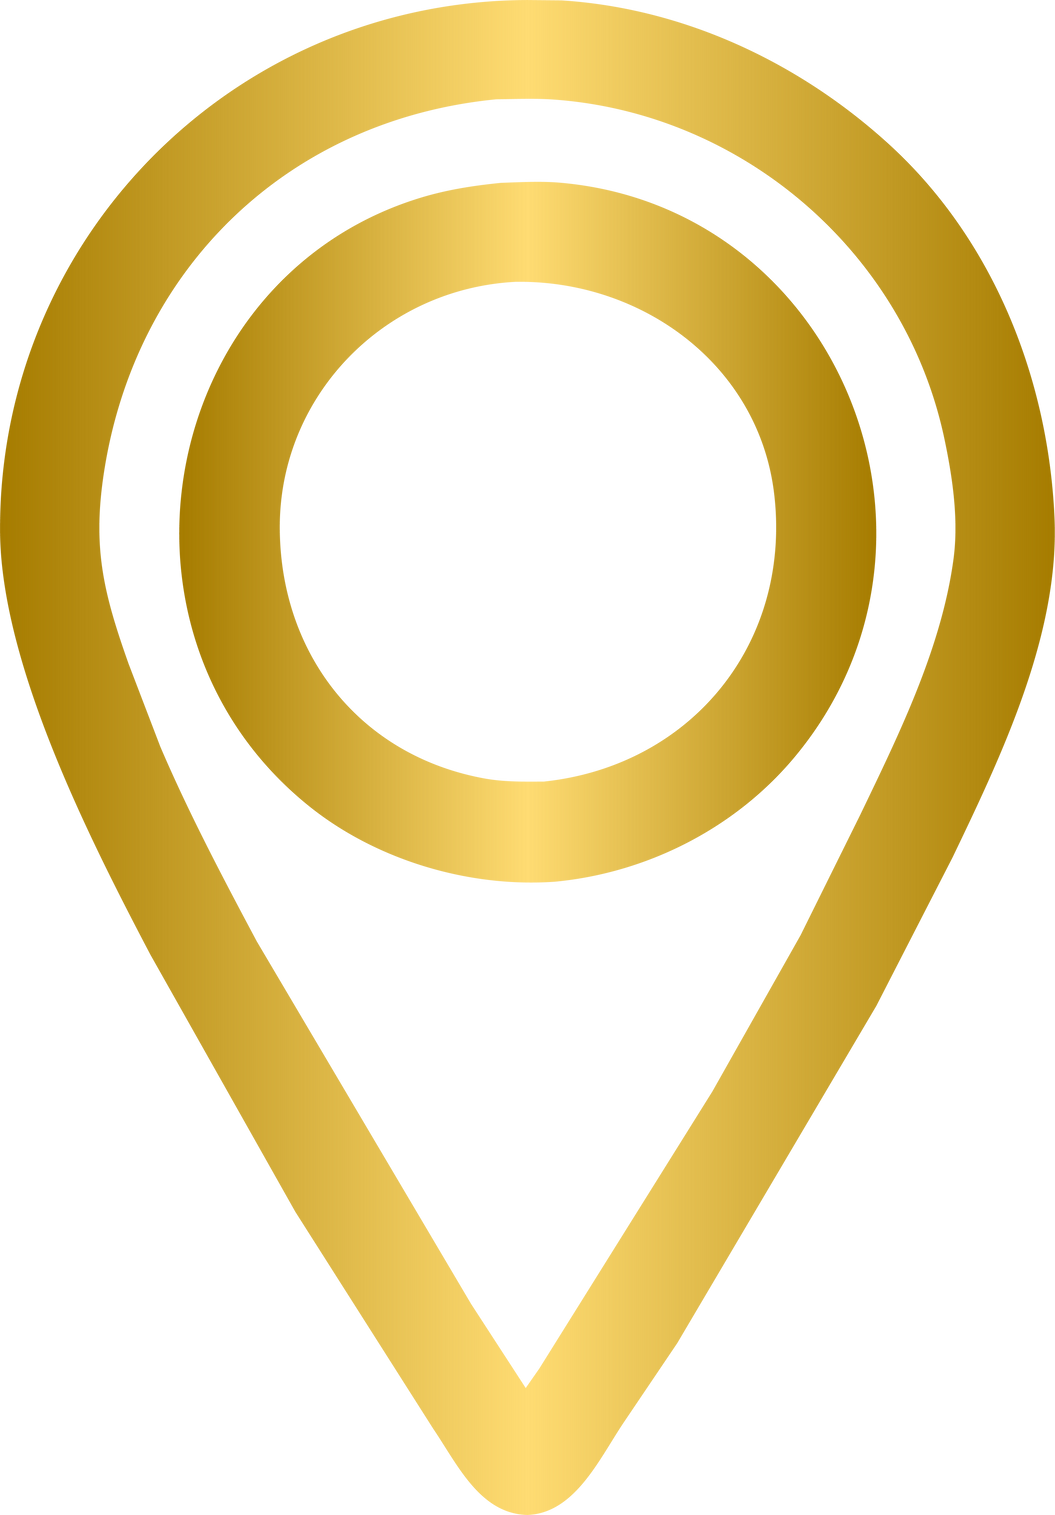 Golden location pin icon